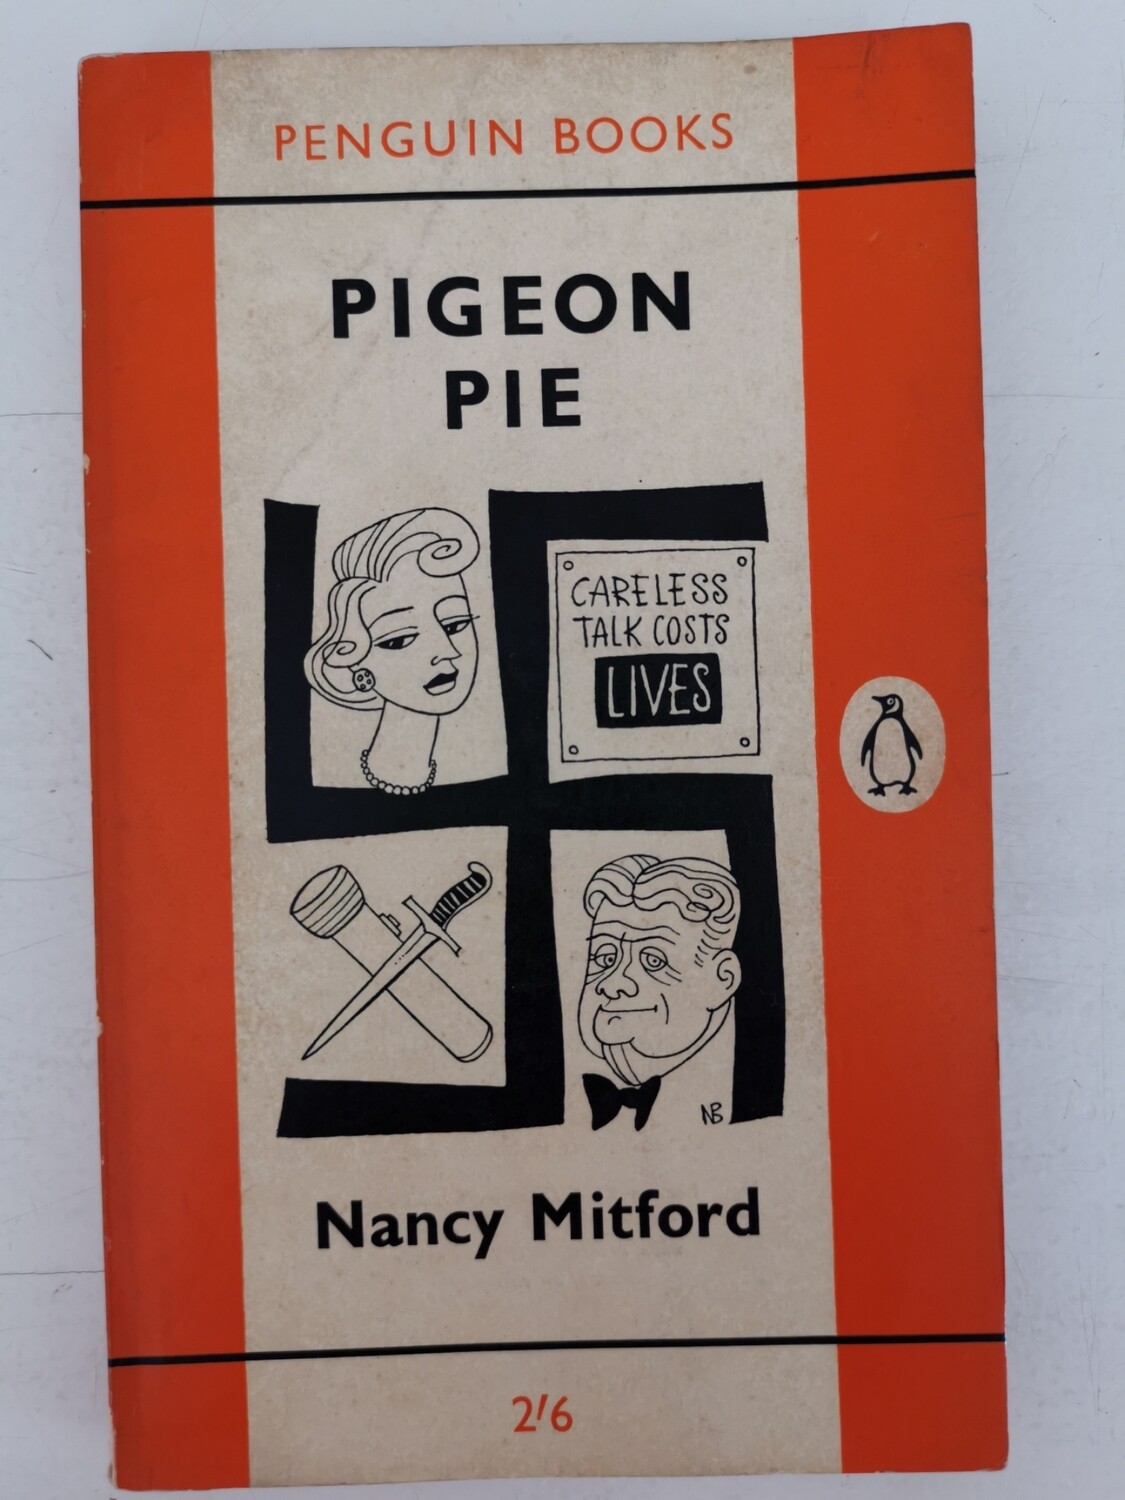 Pigeon pie, Nancy Mitford